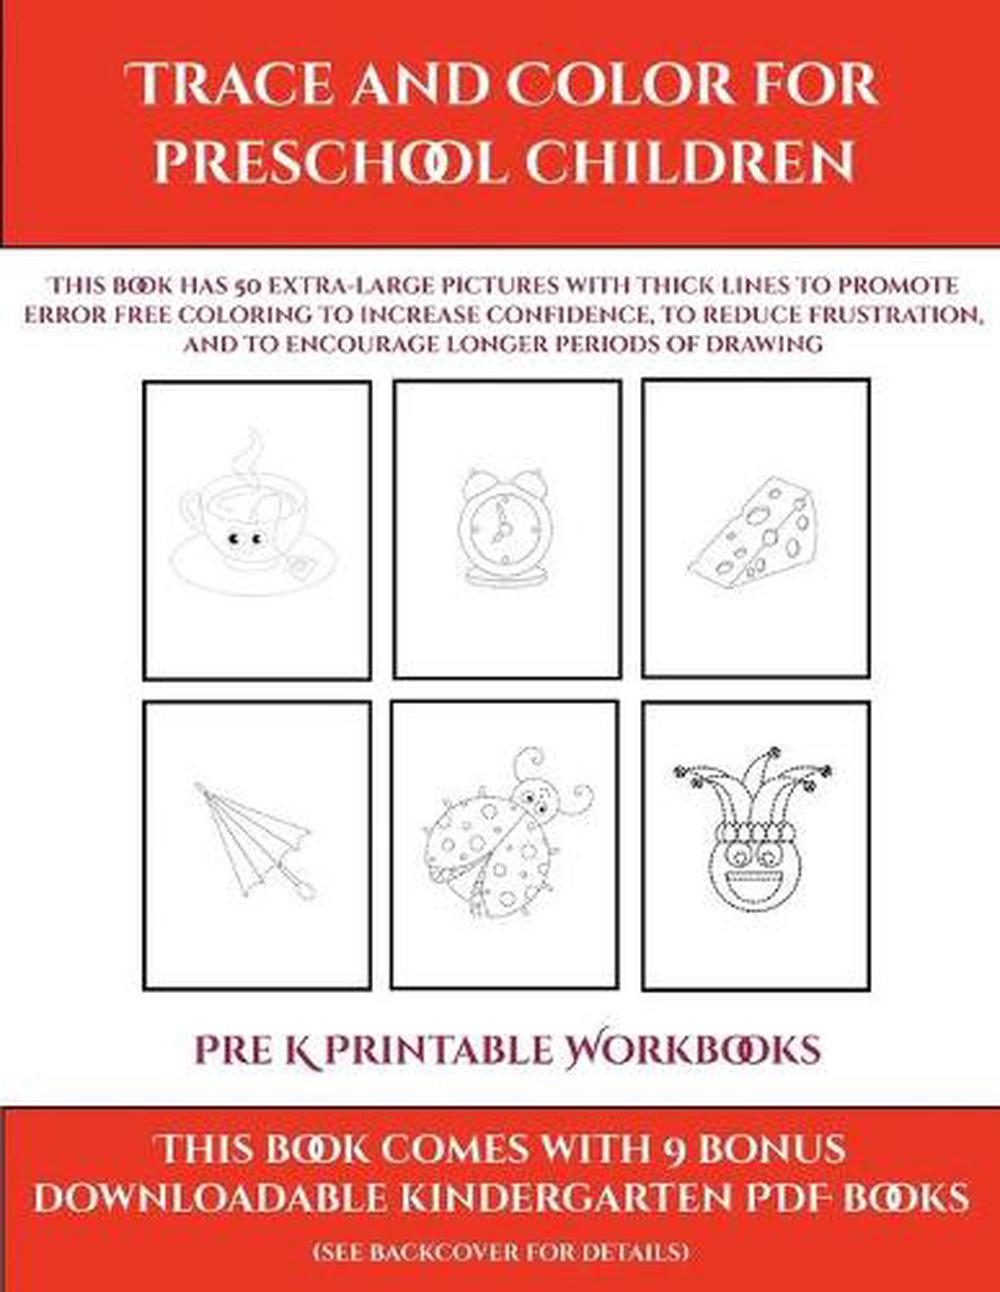 Pre K Printable Workbooks (trace and Color for Preschool Children